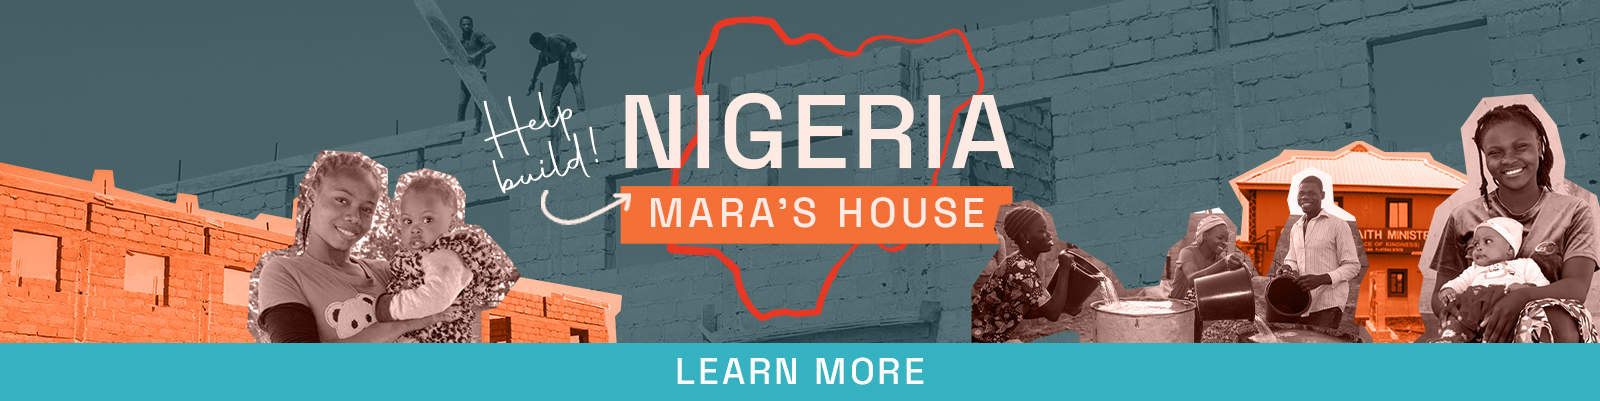 Mara's House - Nigeria